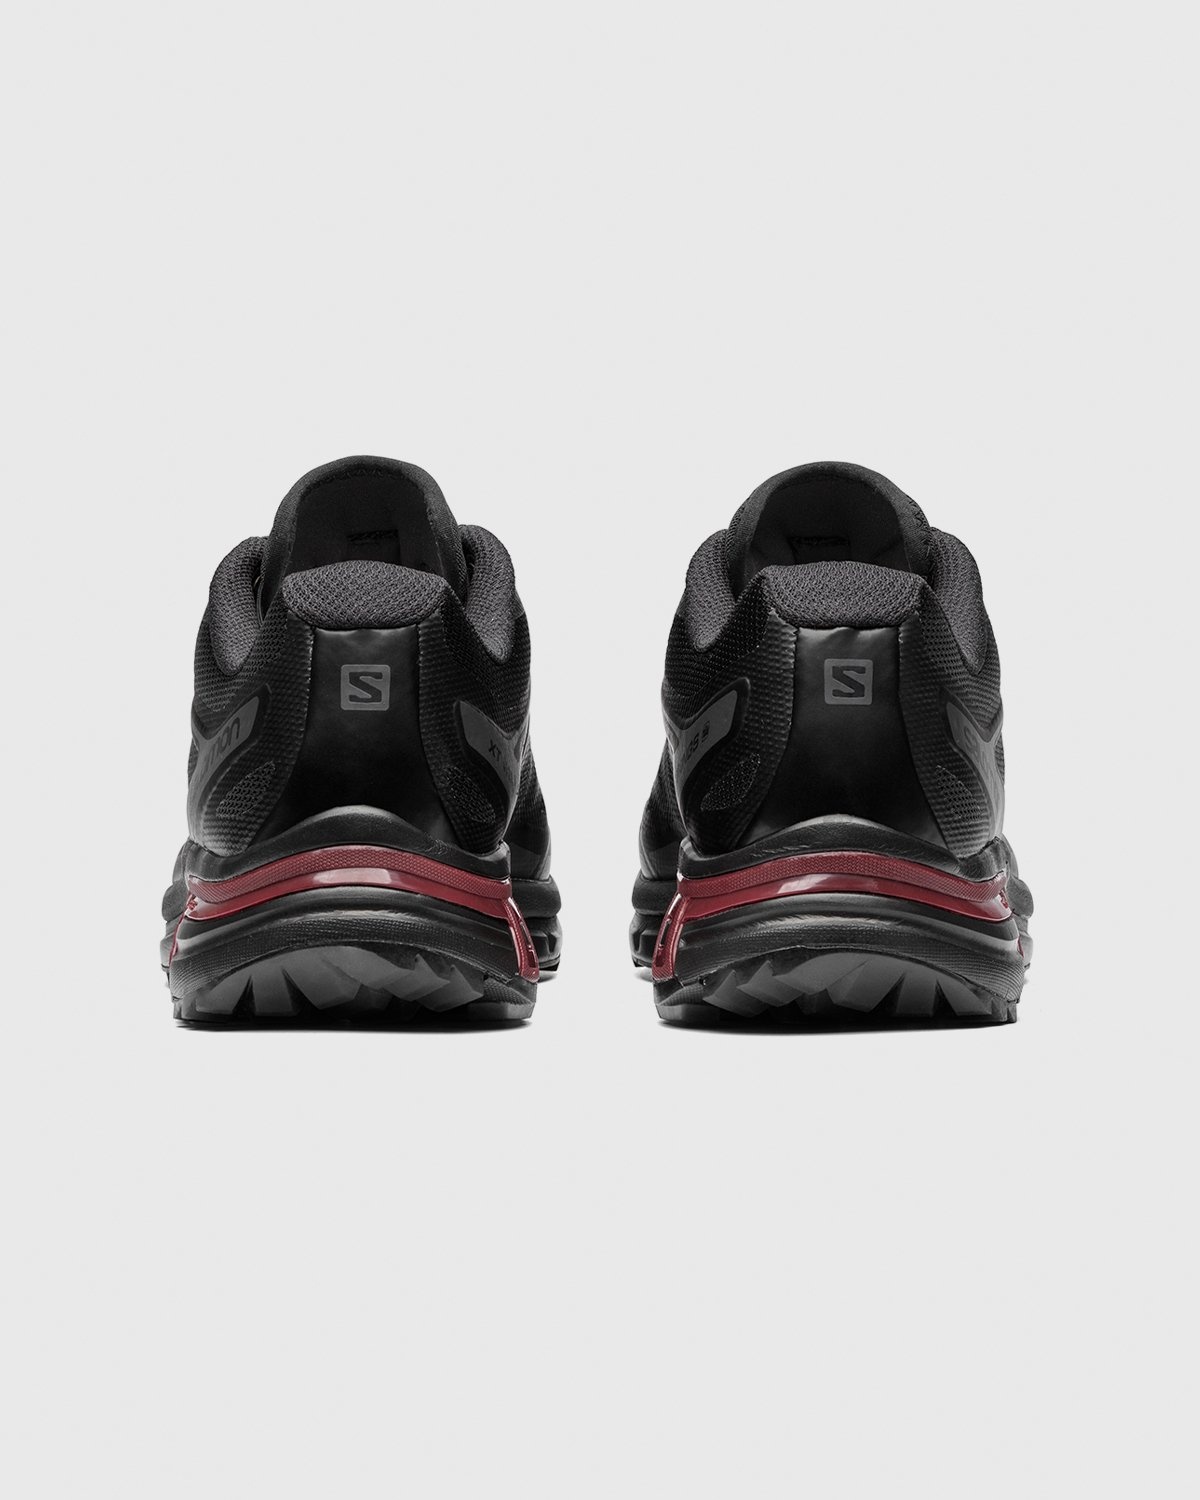 Salomon – XT-Wings 2 Advanced Black - Low Top Sneakers - Black - Image 3